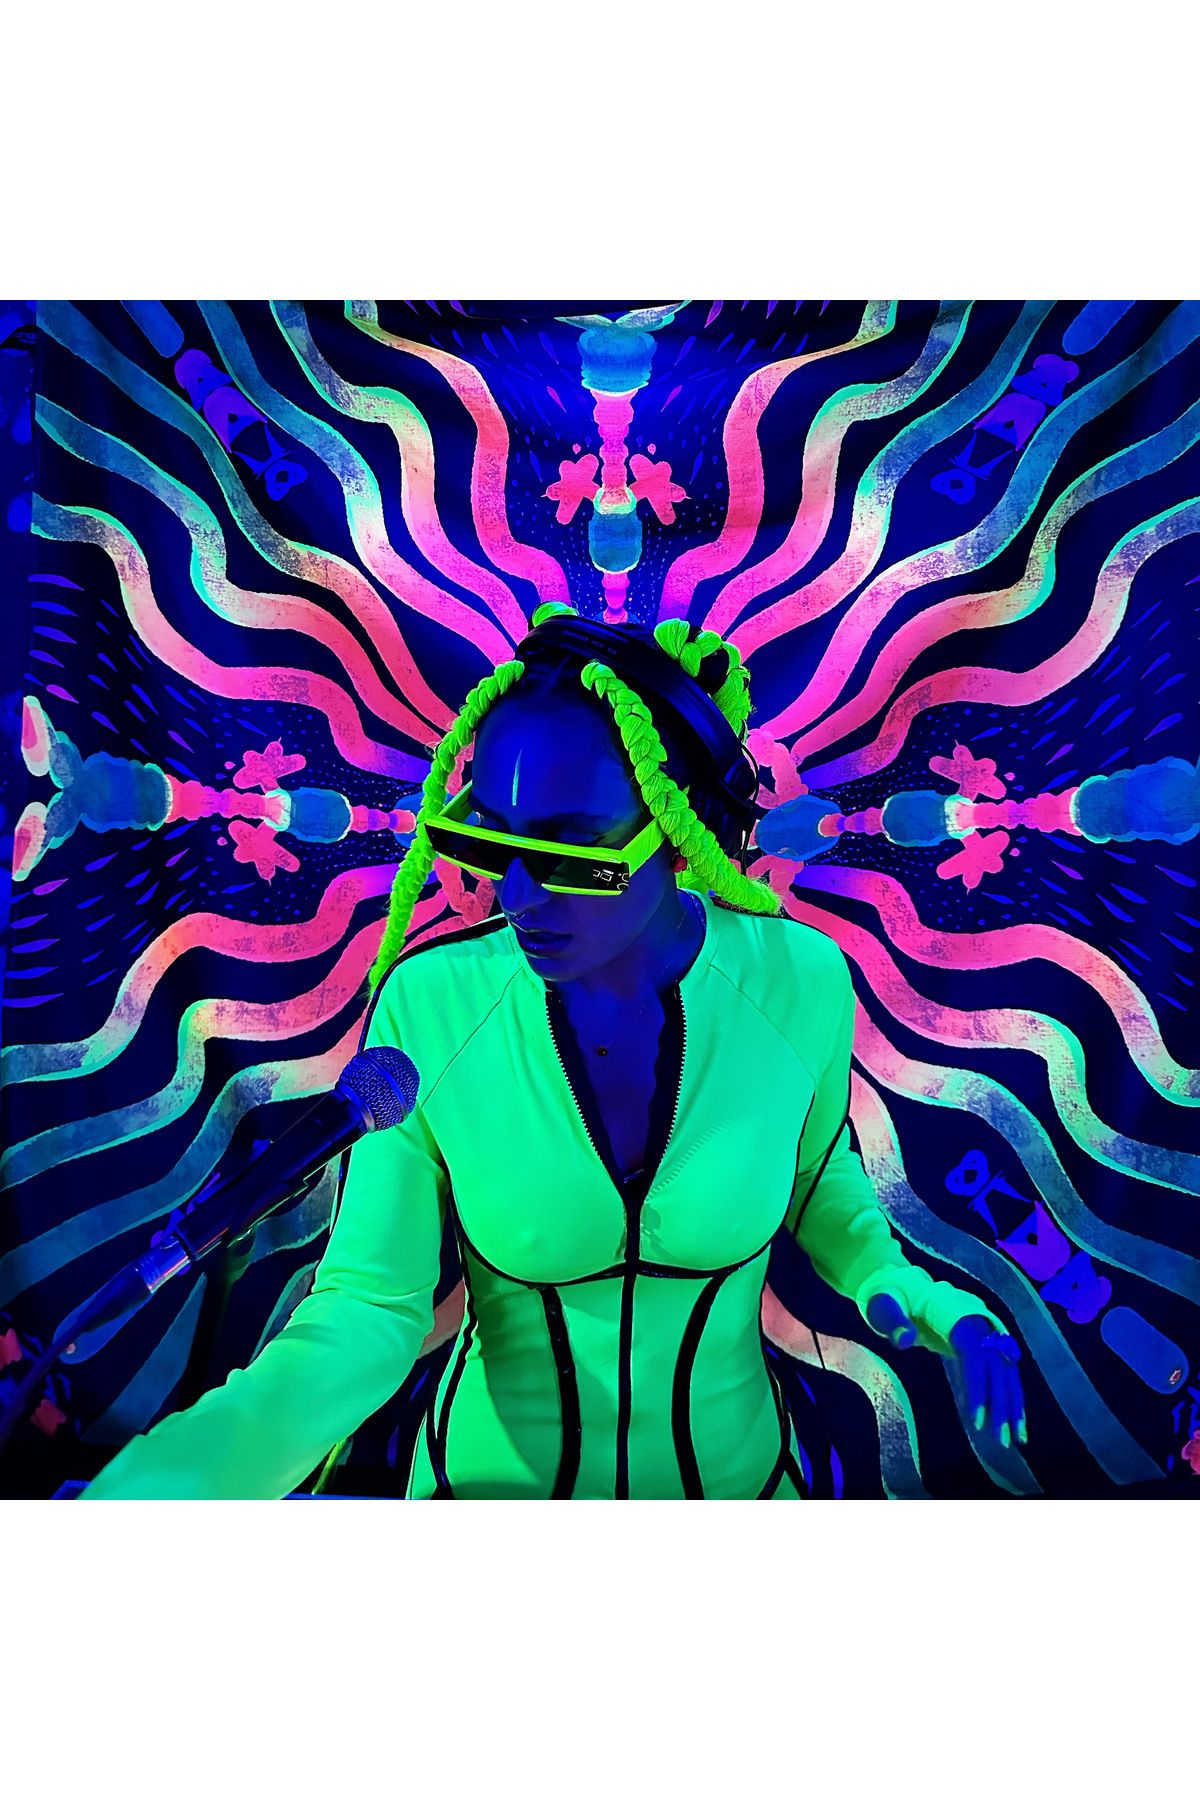 WANDER TAPESTRY R A V E - N E O N / Blacklight ile Parlayan Neon Duvar Örtüsü UV Aktif Tapestry